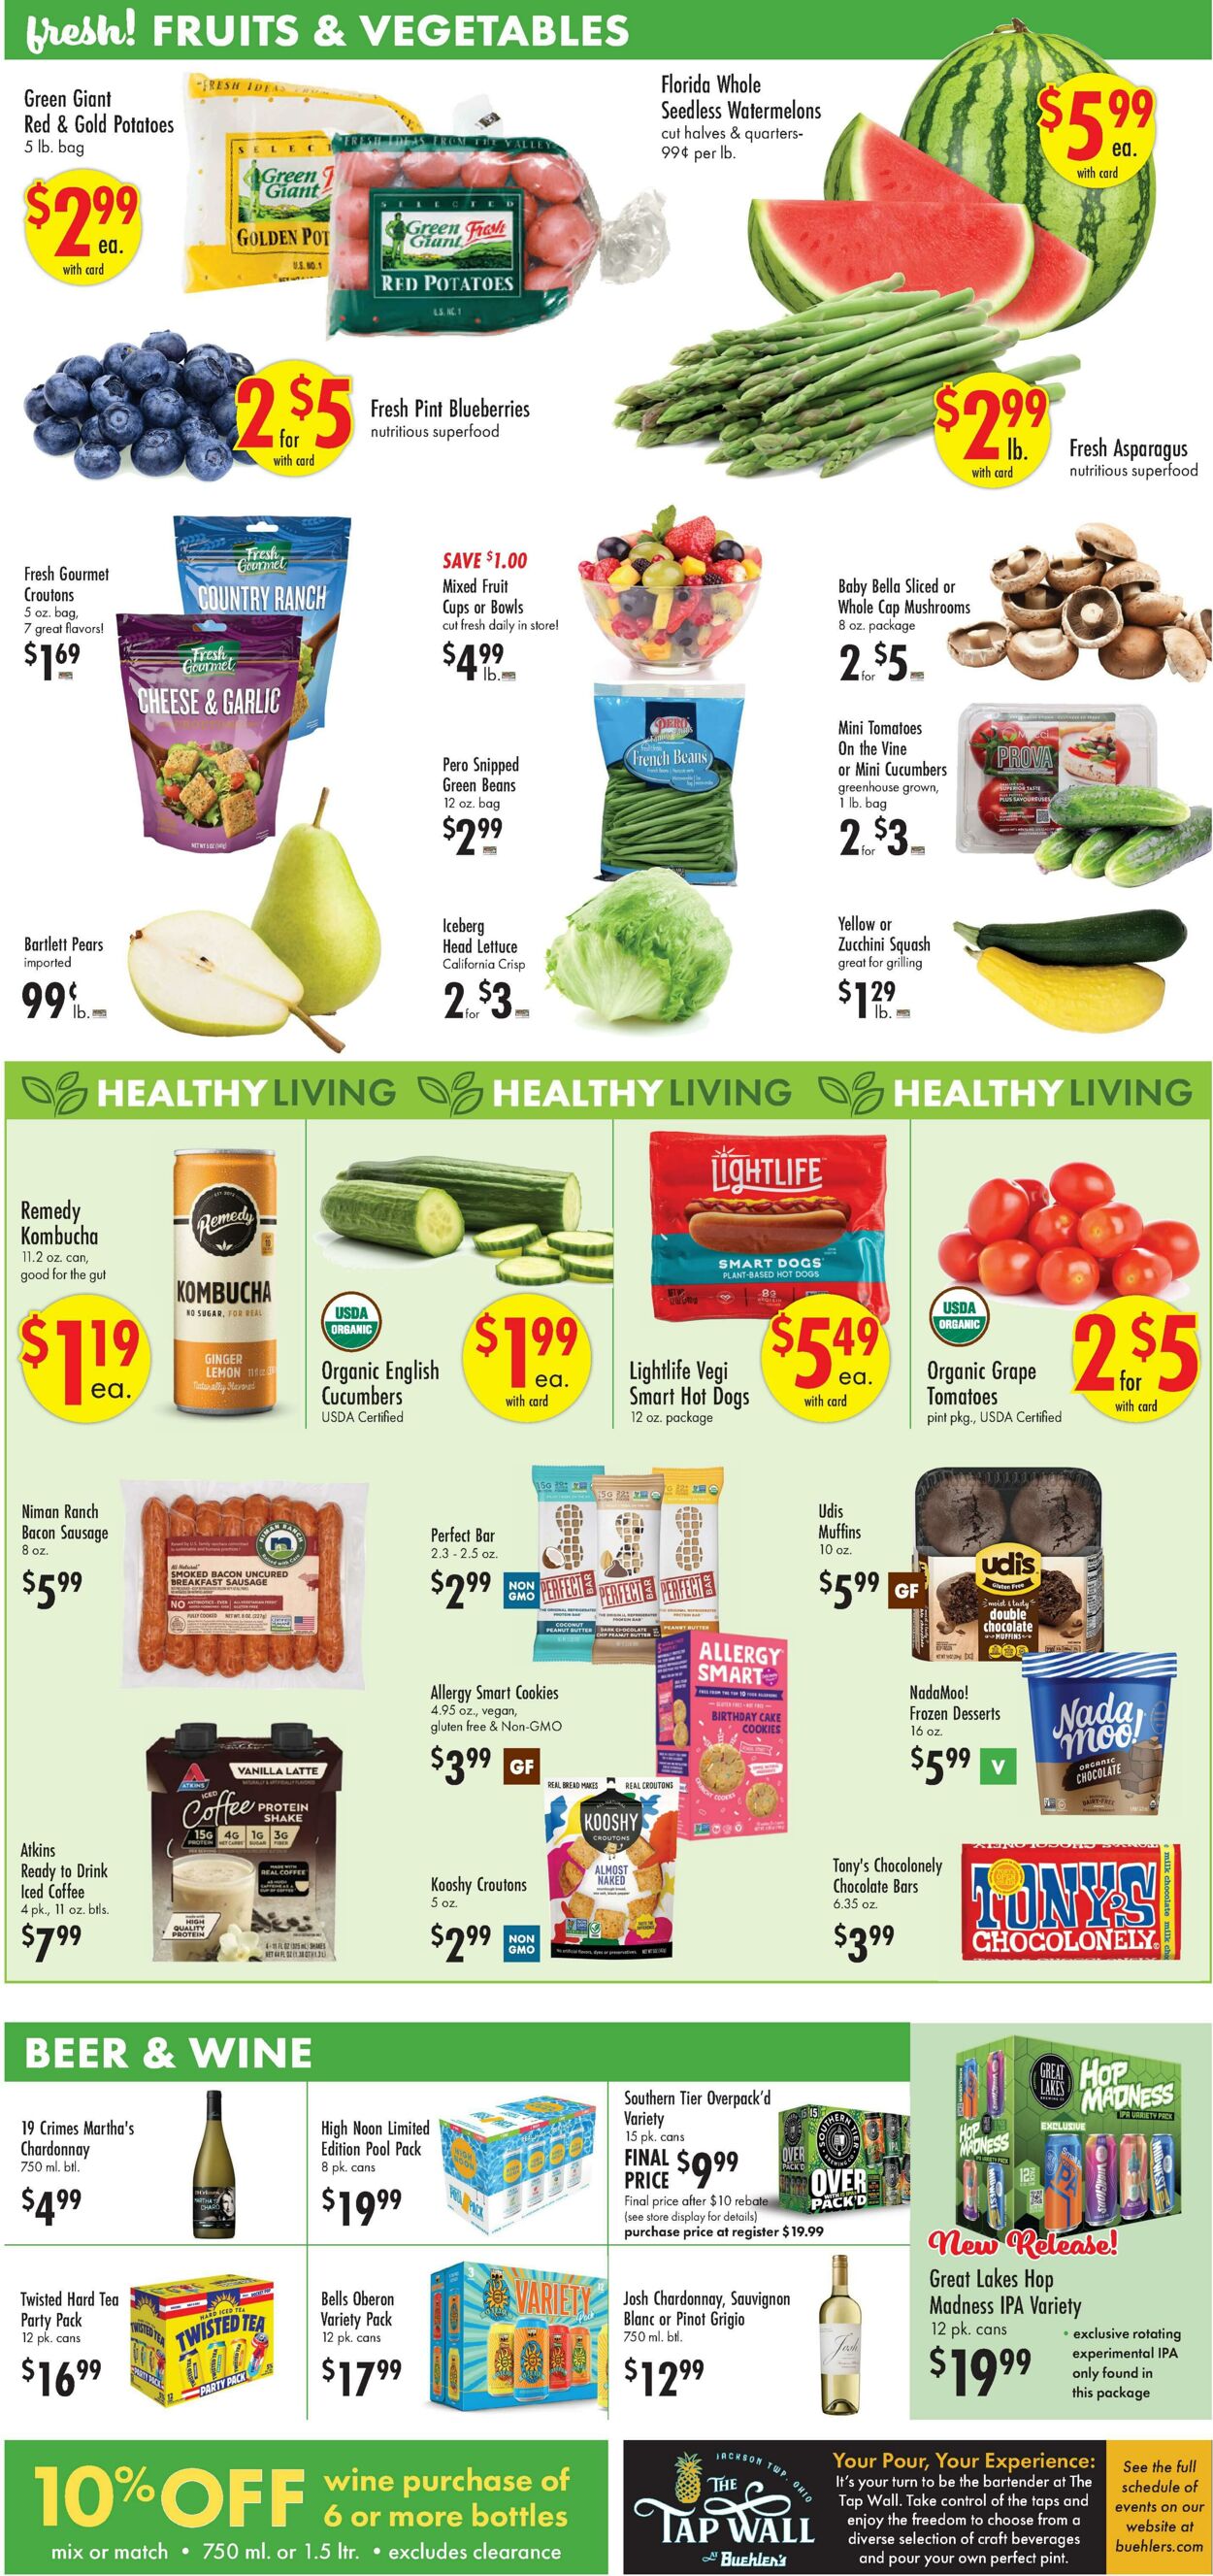 Weekly ad Buehler's Fresh Food 05/08/2024 - 05/14/2024